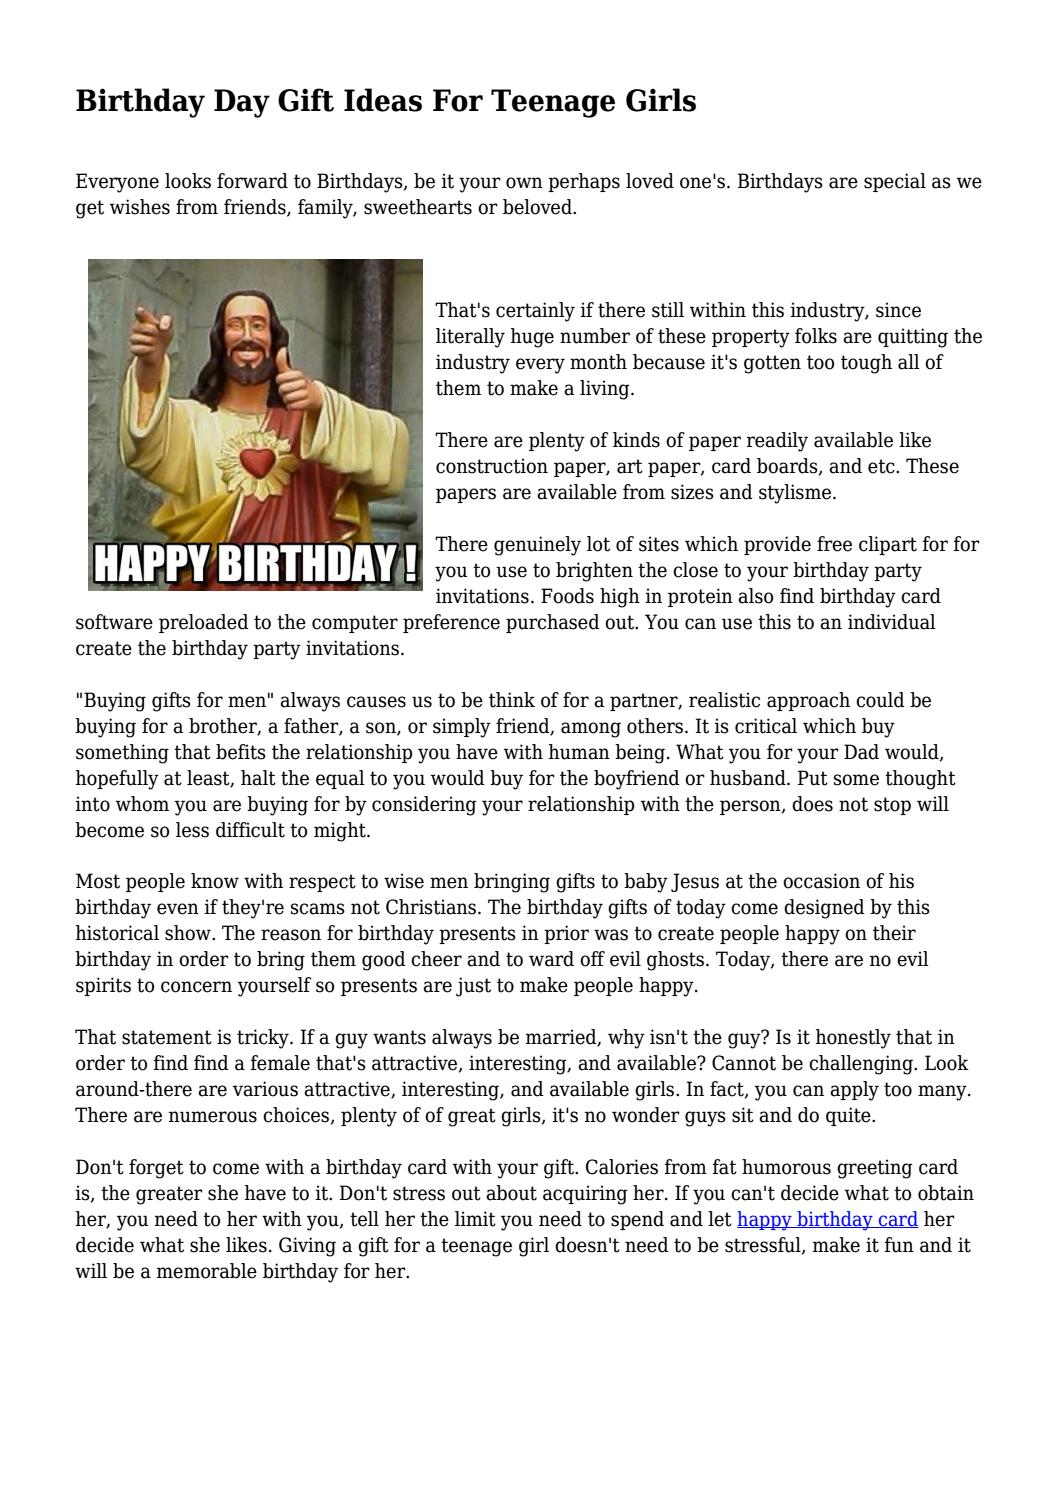 Birthday Card Ideas For Teenage Girl Birthday Day Gift Ideas For Teenage Girls